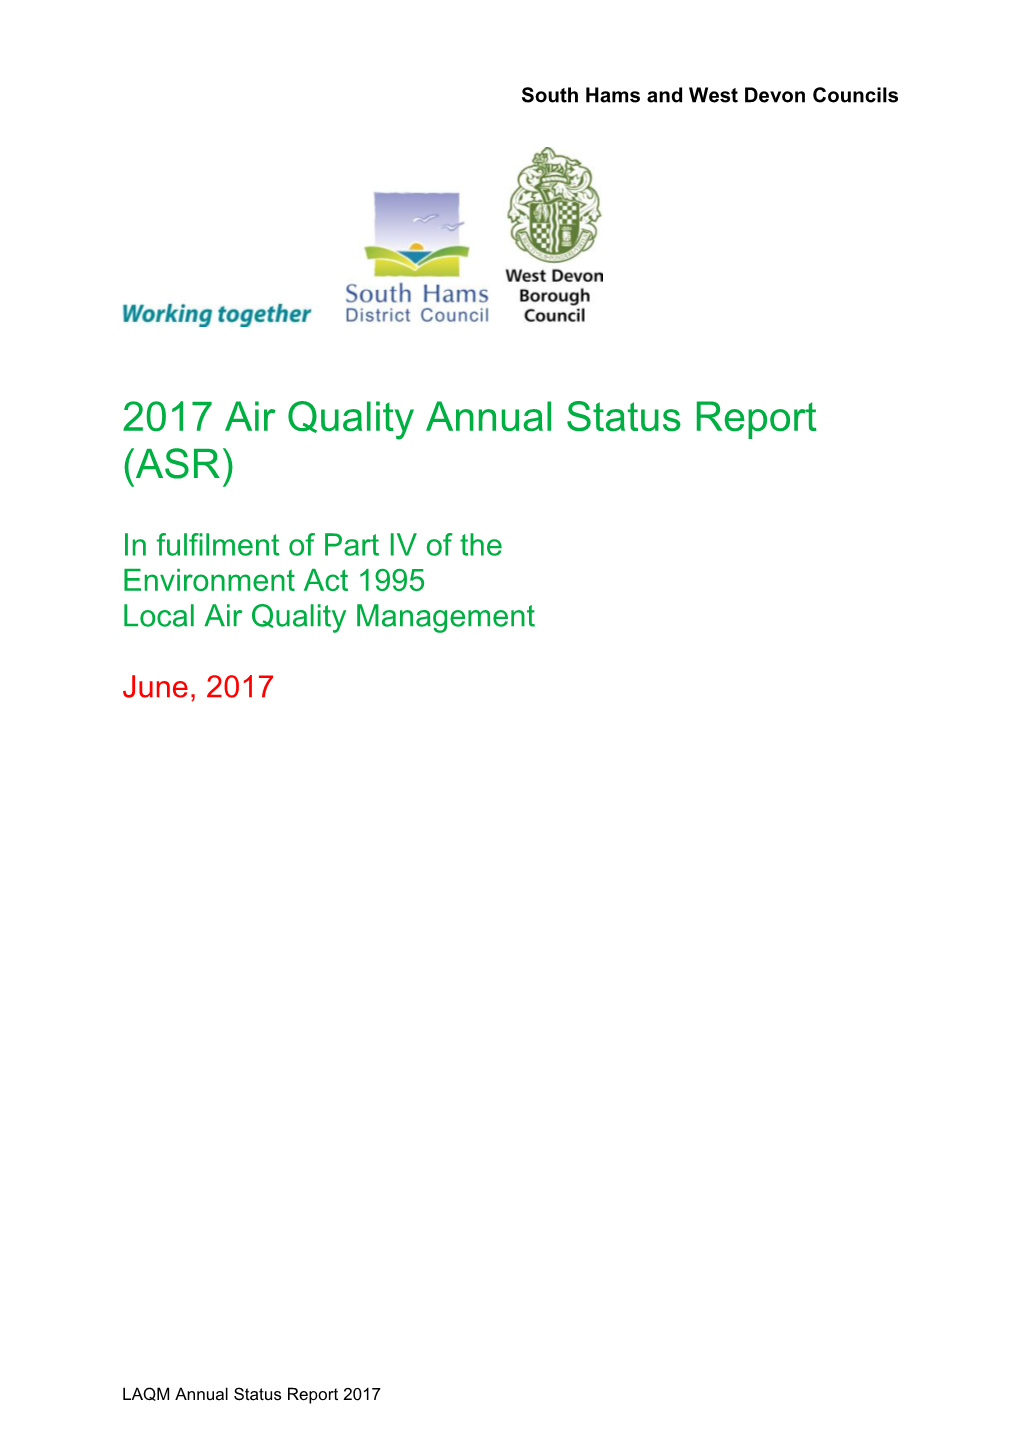 Air Quality Annual Status Report (ASR)